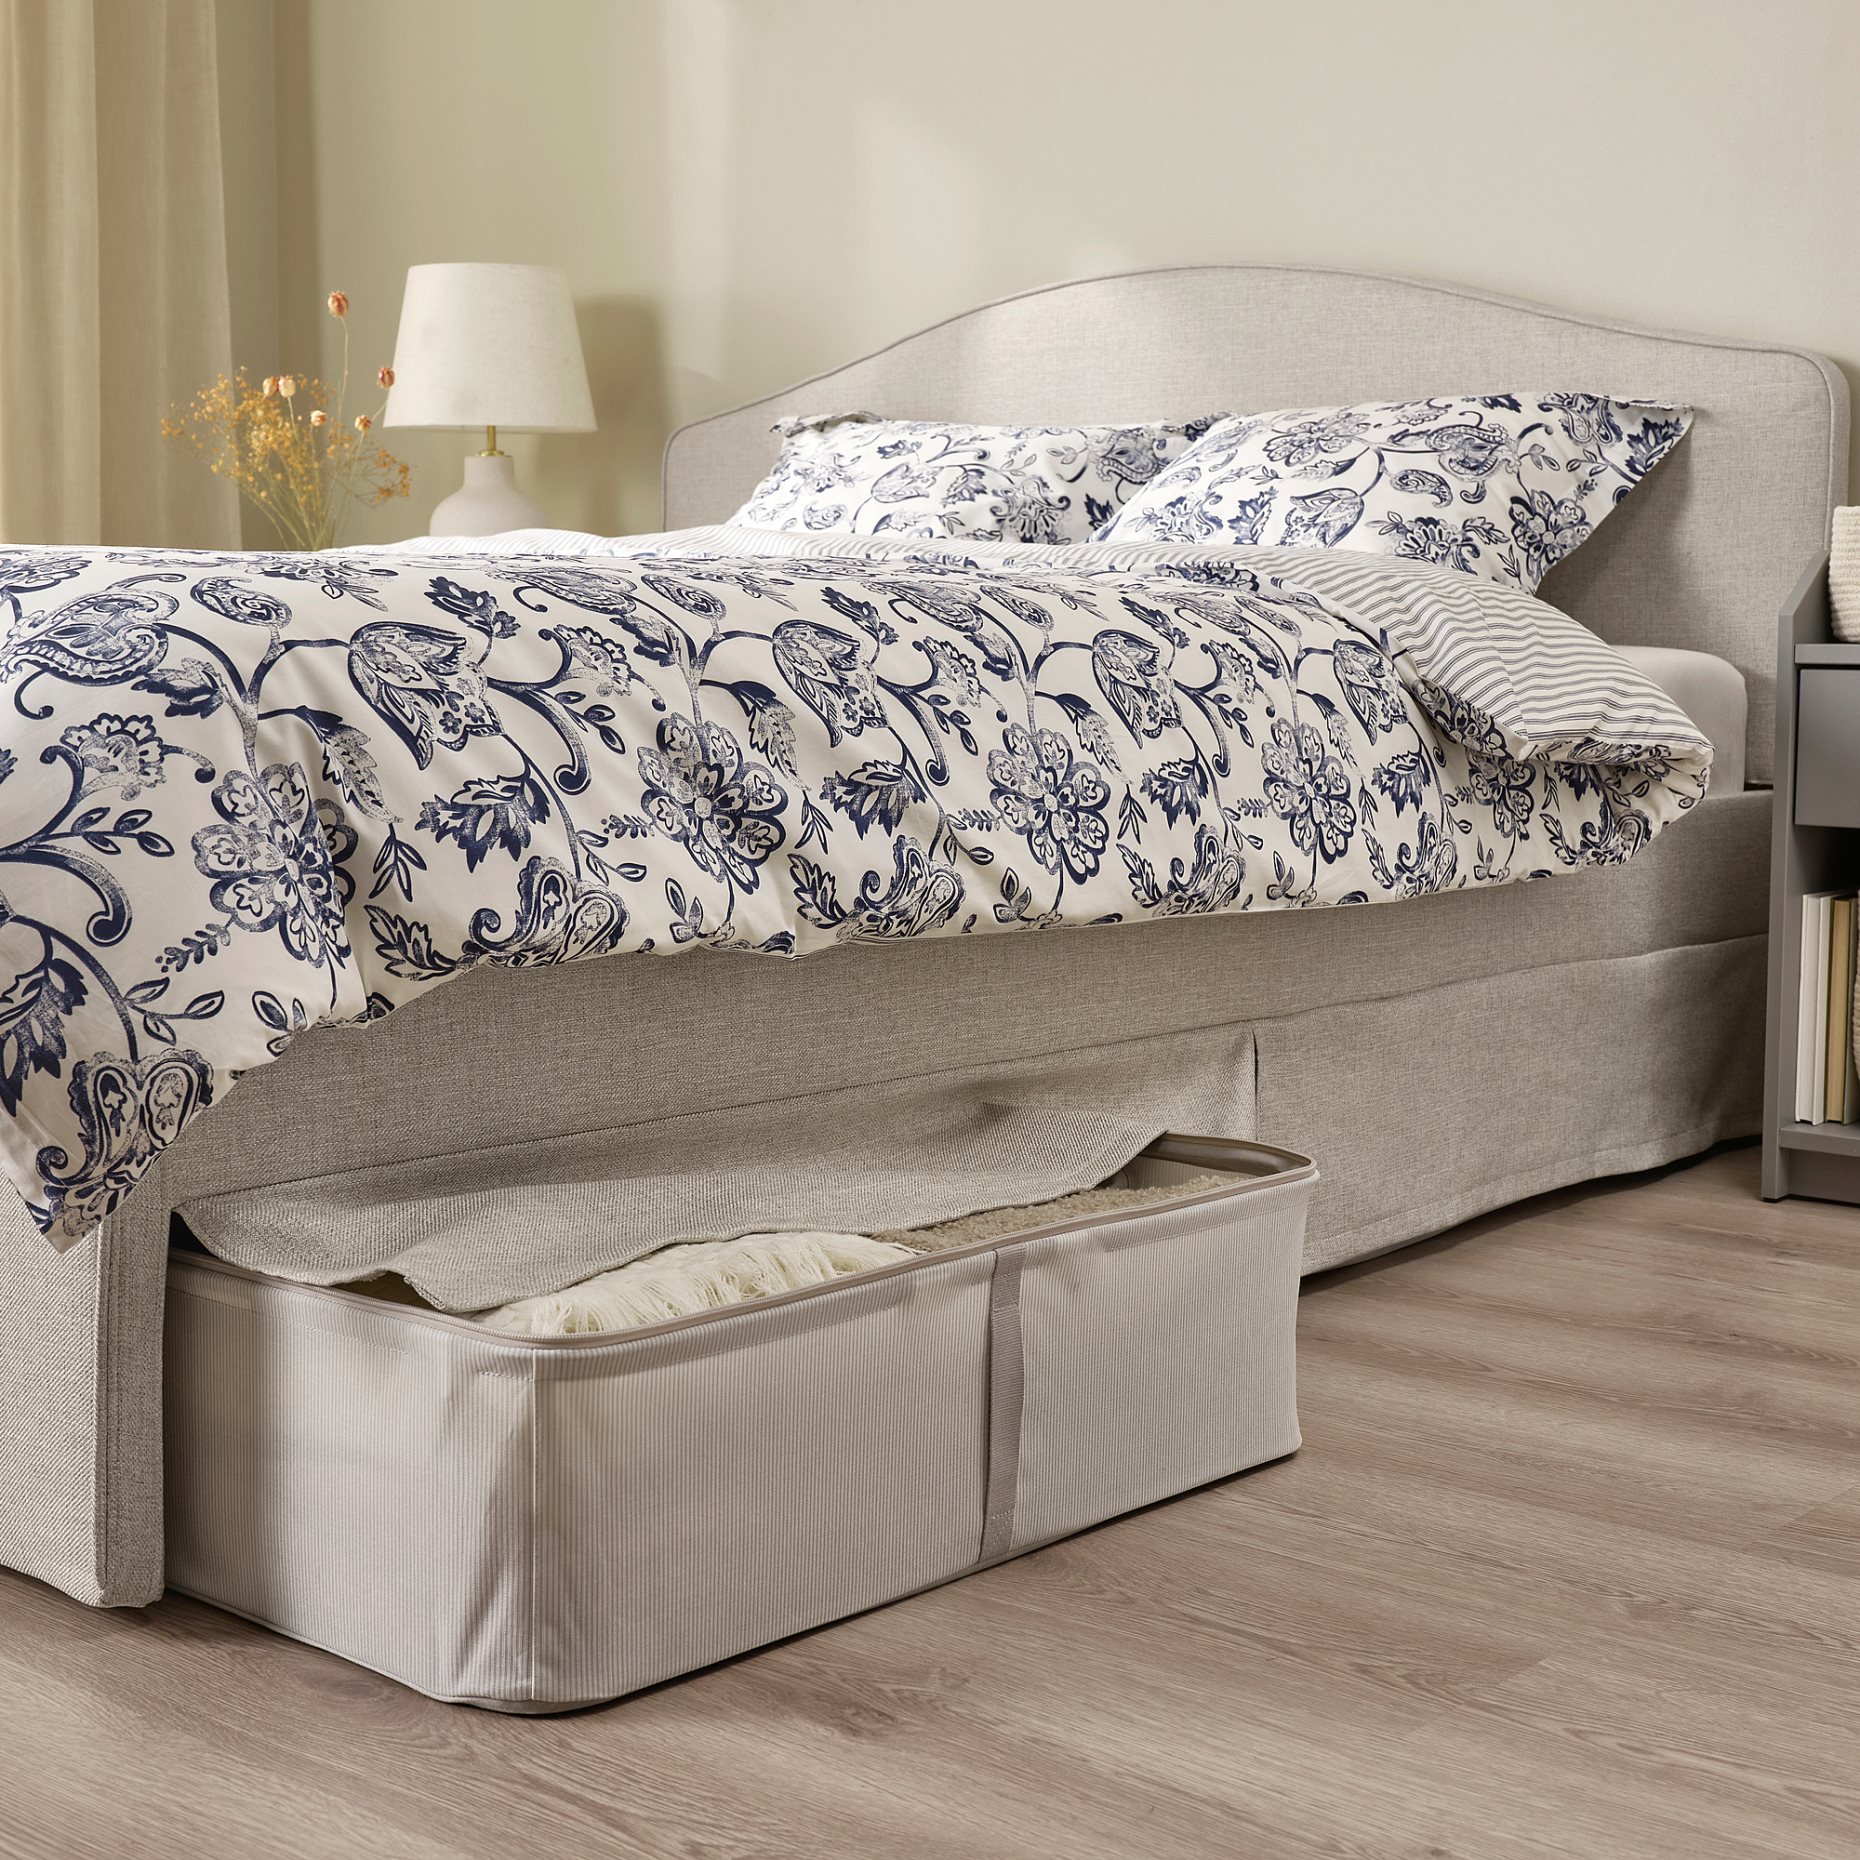 RAMNEFJALL, upholstered bed frame, 160x200 cm, 695.527.44